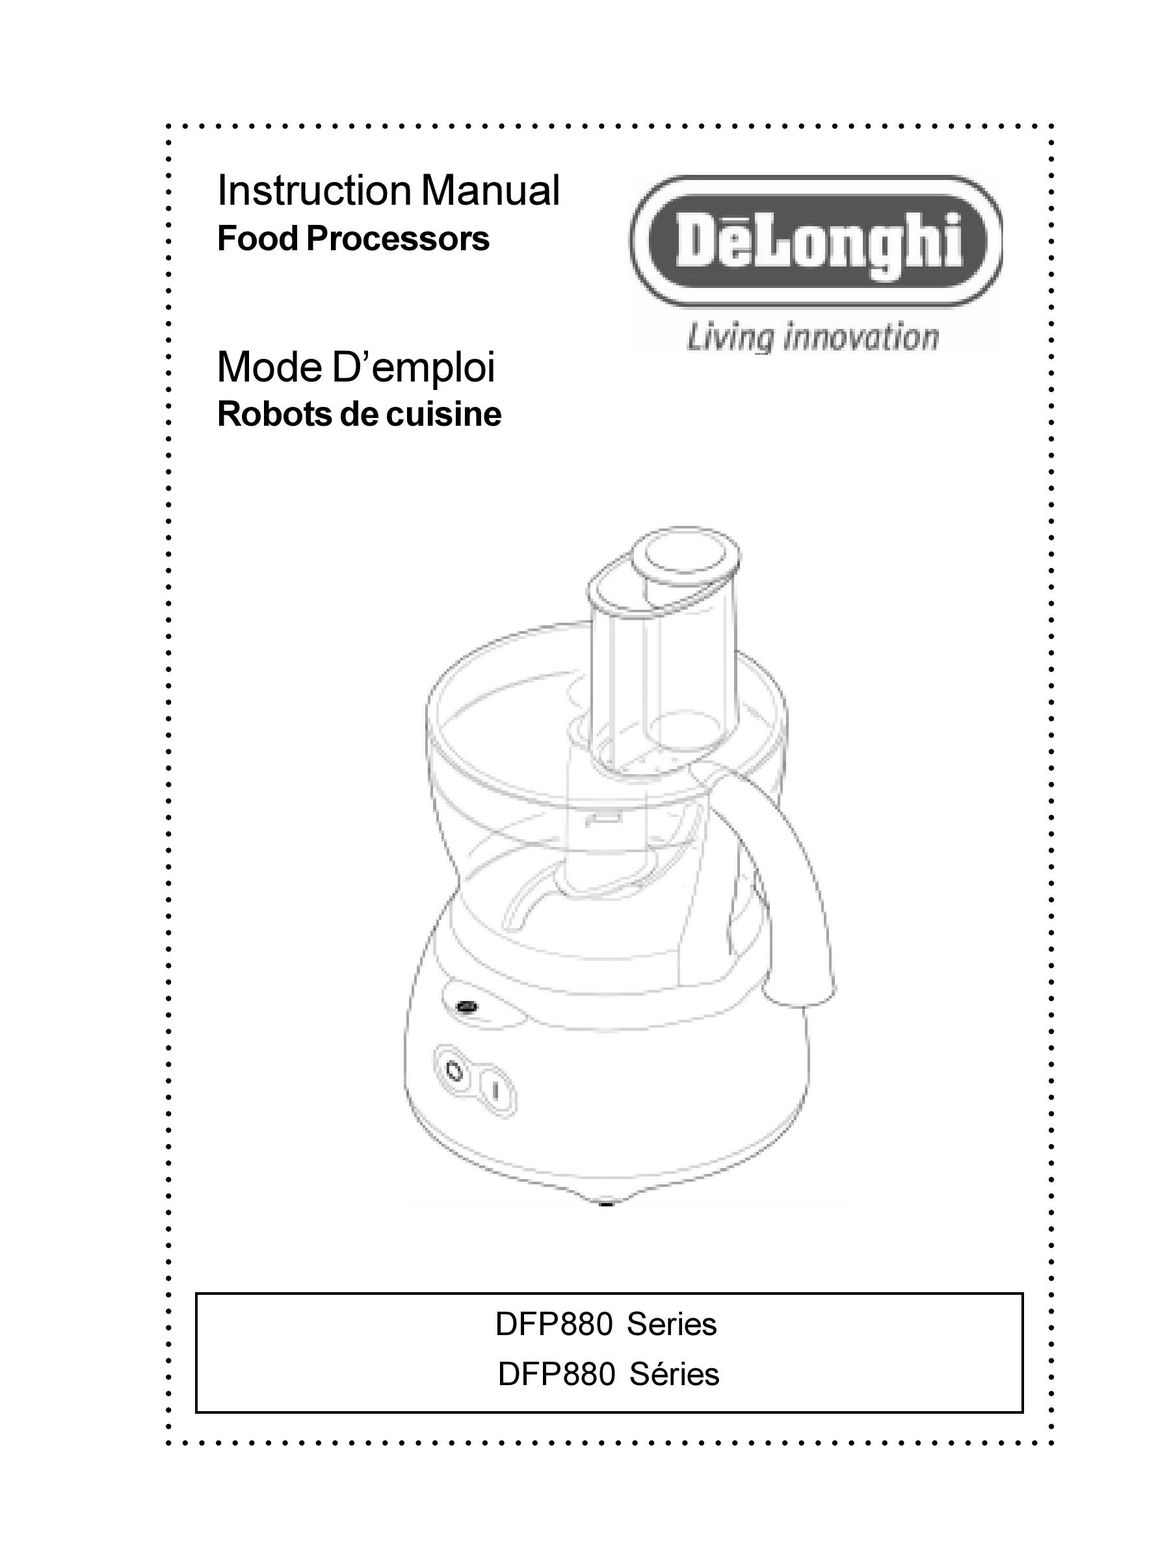 DeLonghi DFP880 series Food Processor User Manual